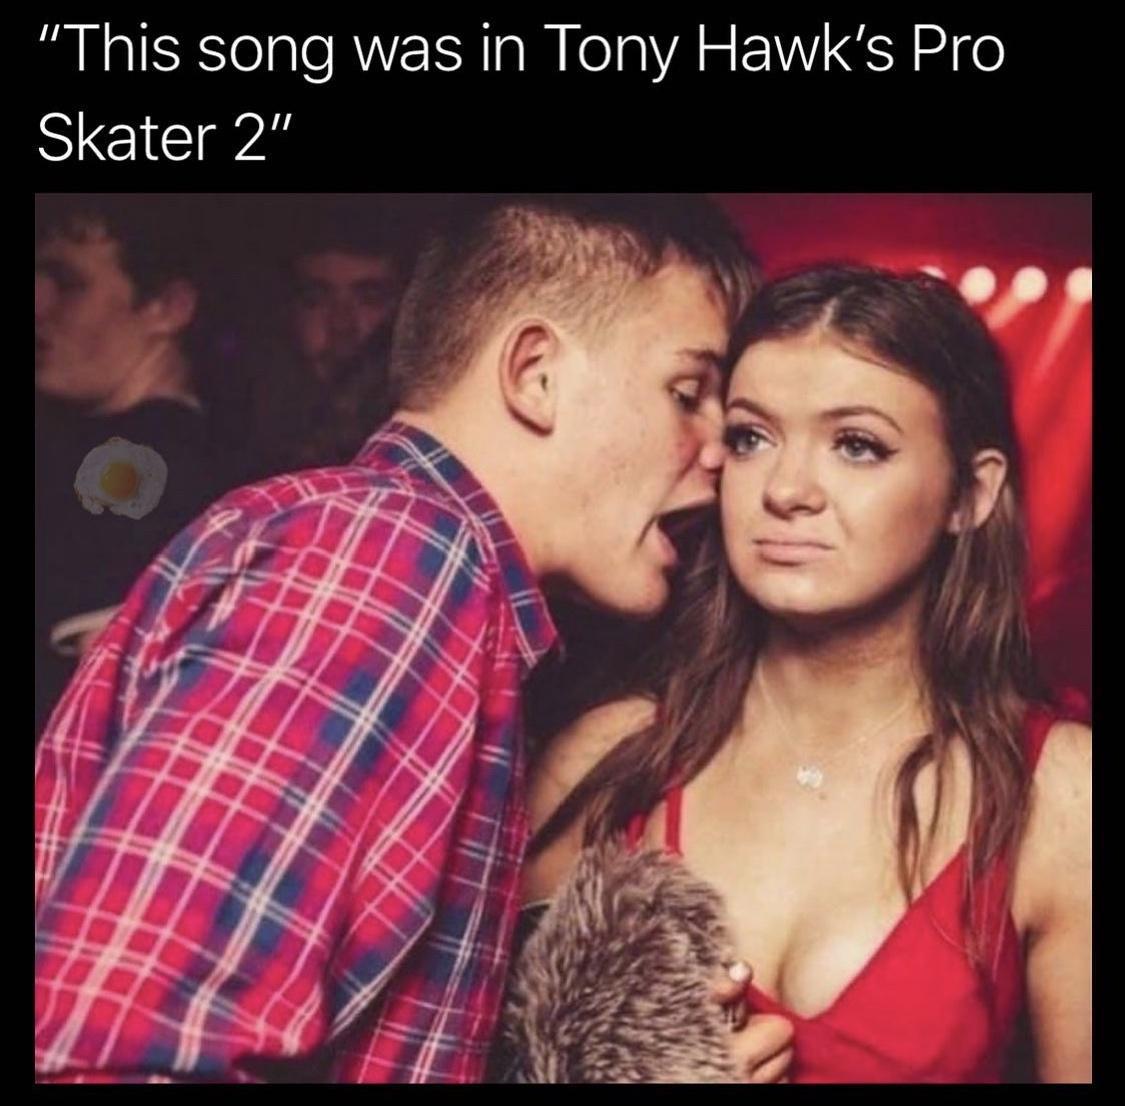 dank memes - song was in tony hawk meme - "This song was in Tony Hawk's Pro Skater 2"